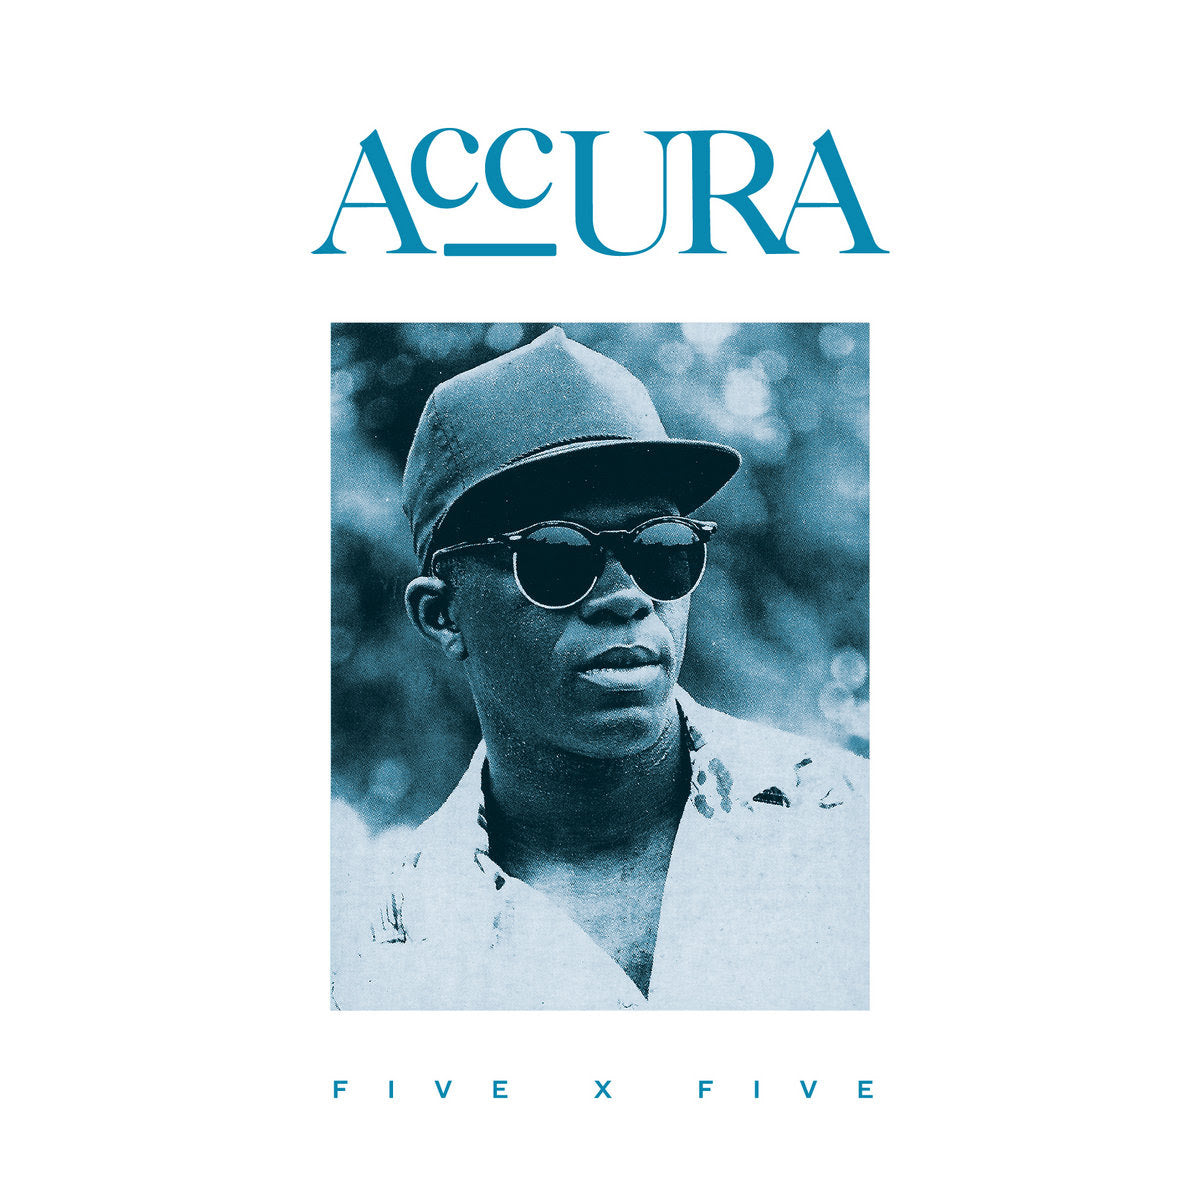 ACCURA - FIVE X FIVE Vinyl LP